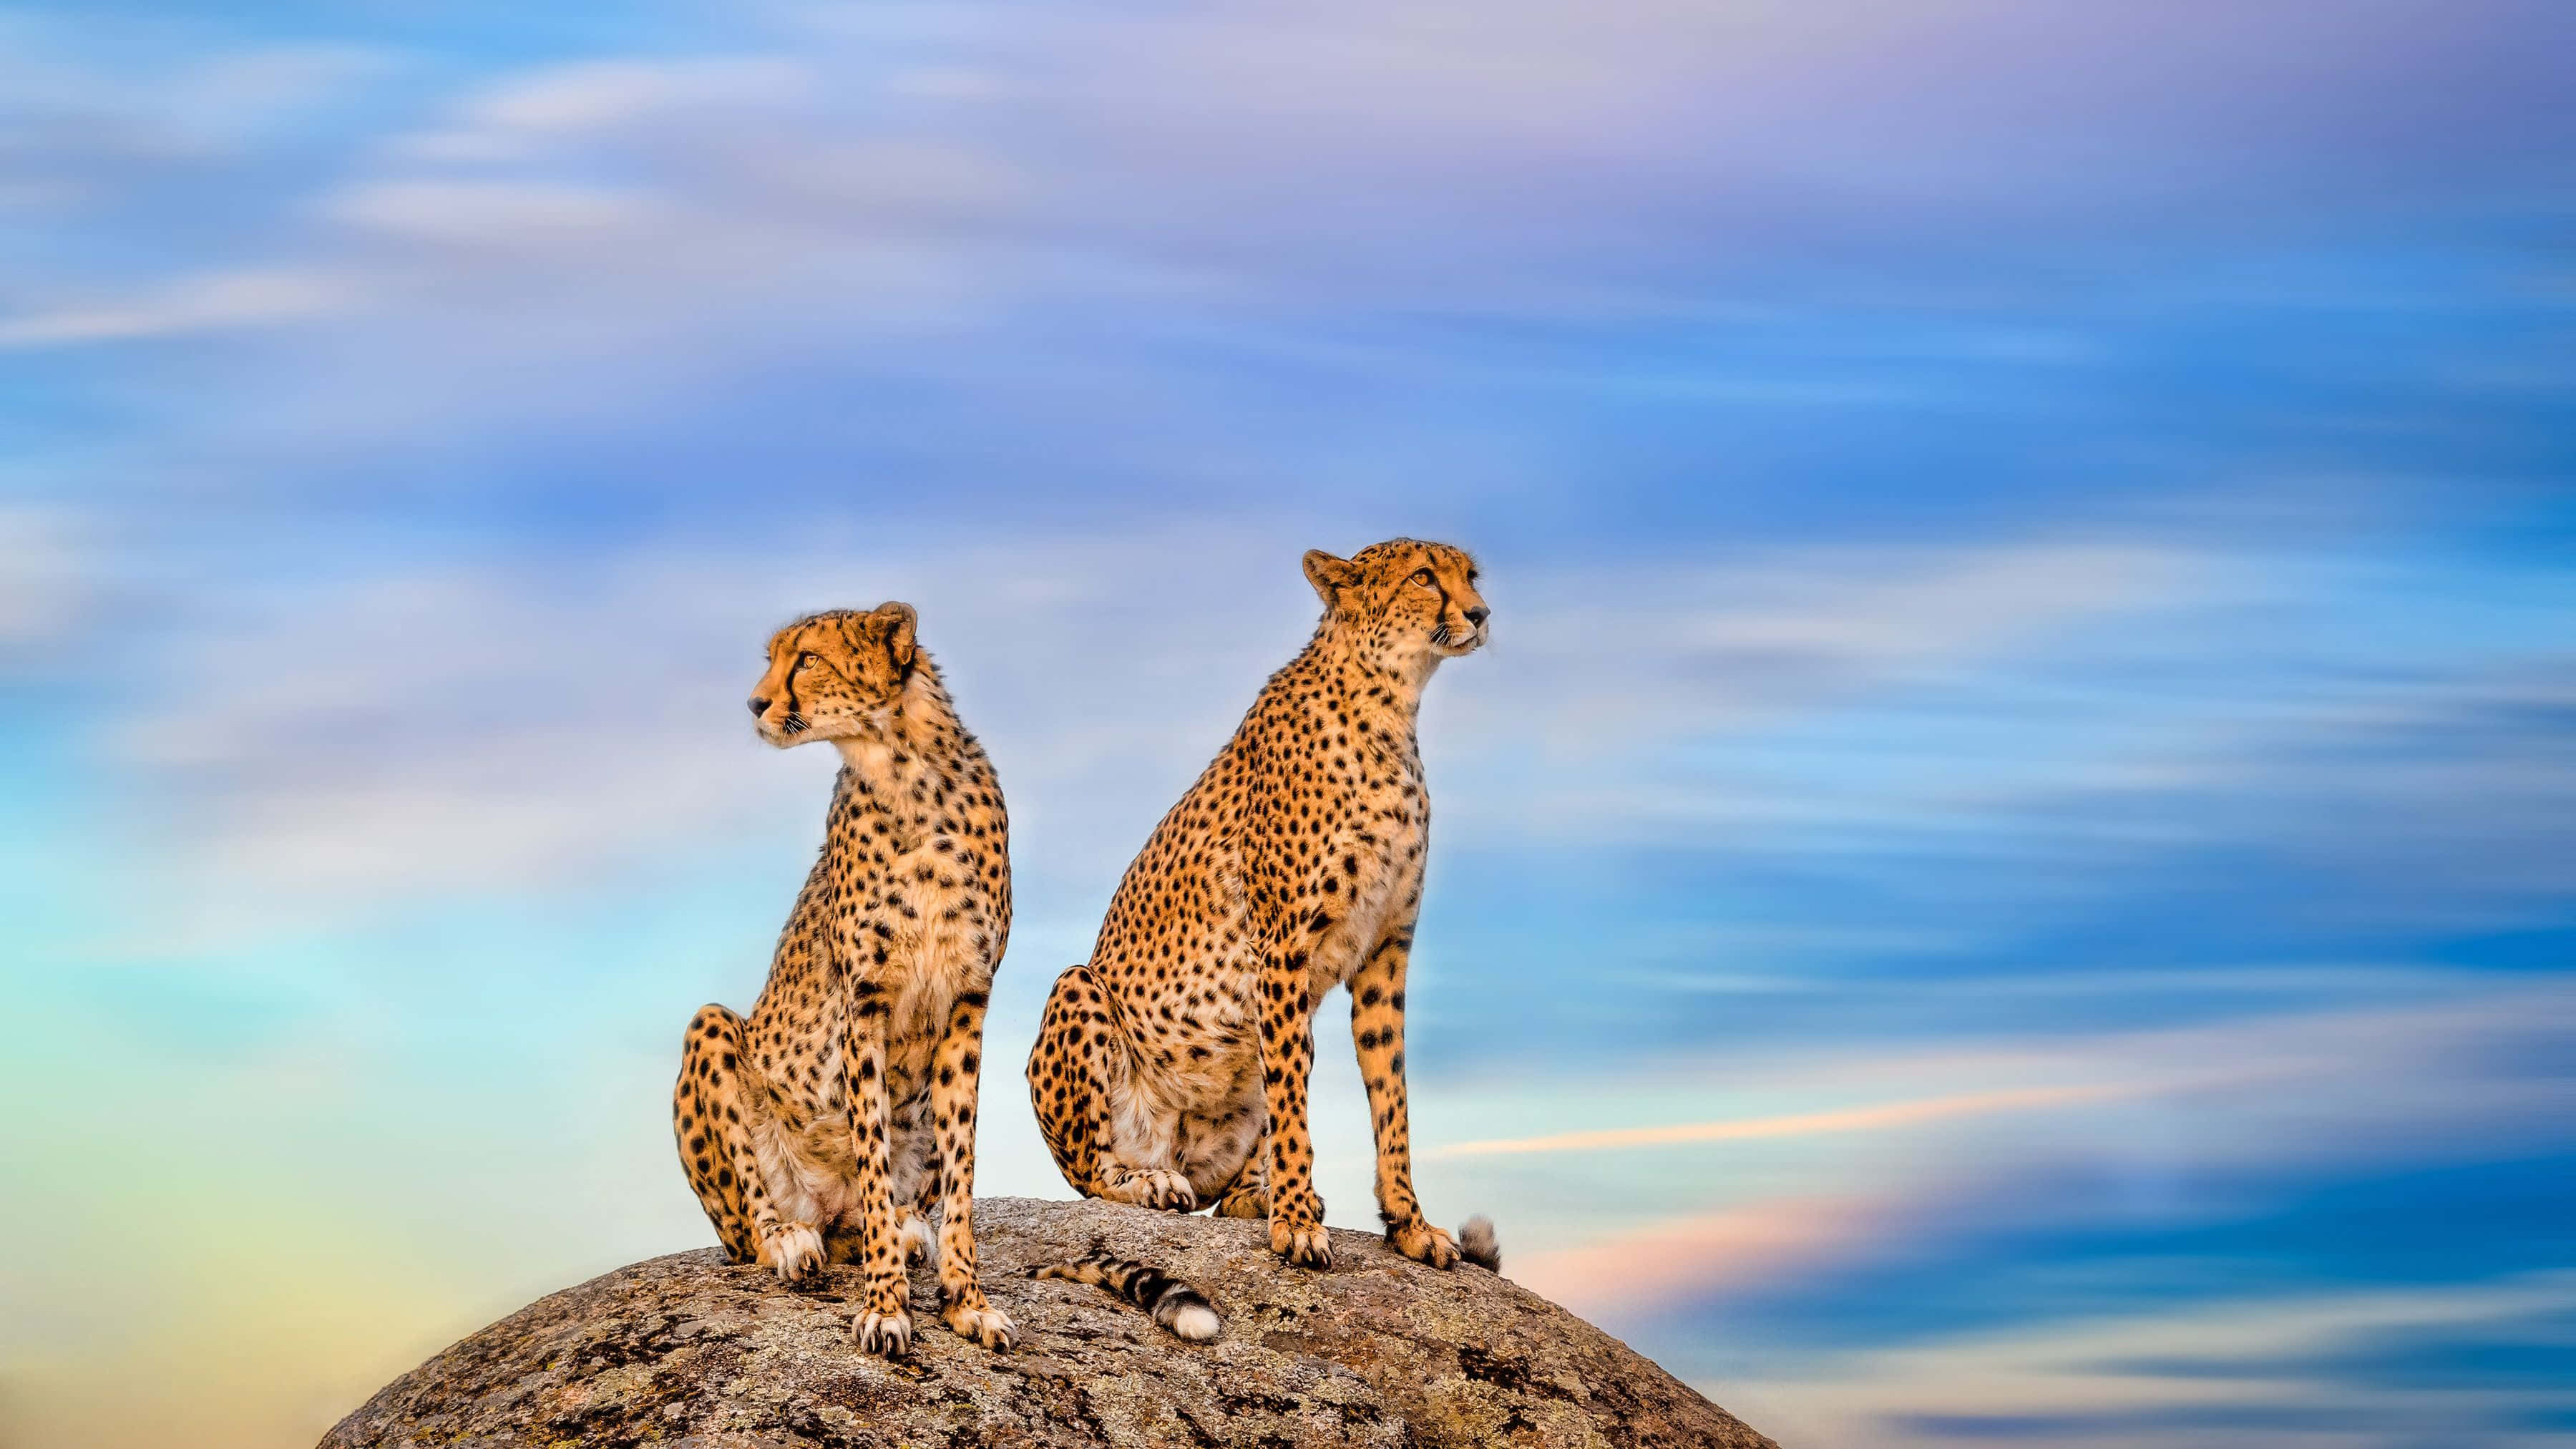 King Cheetah cub